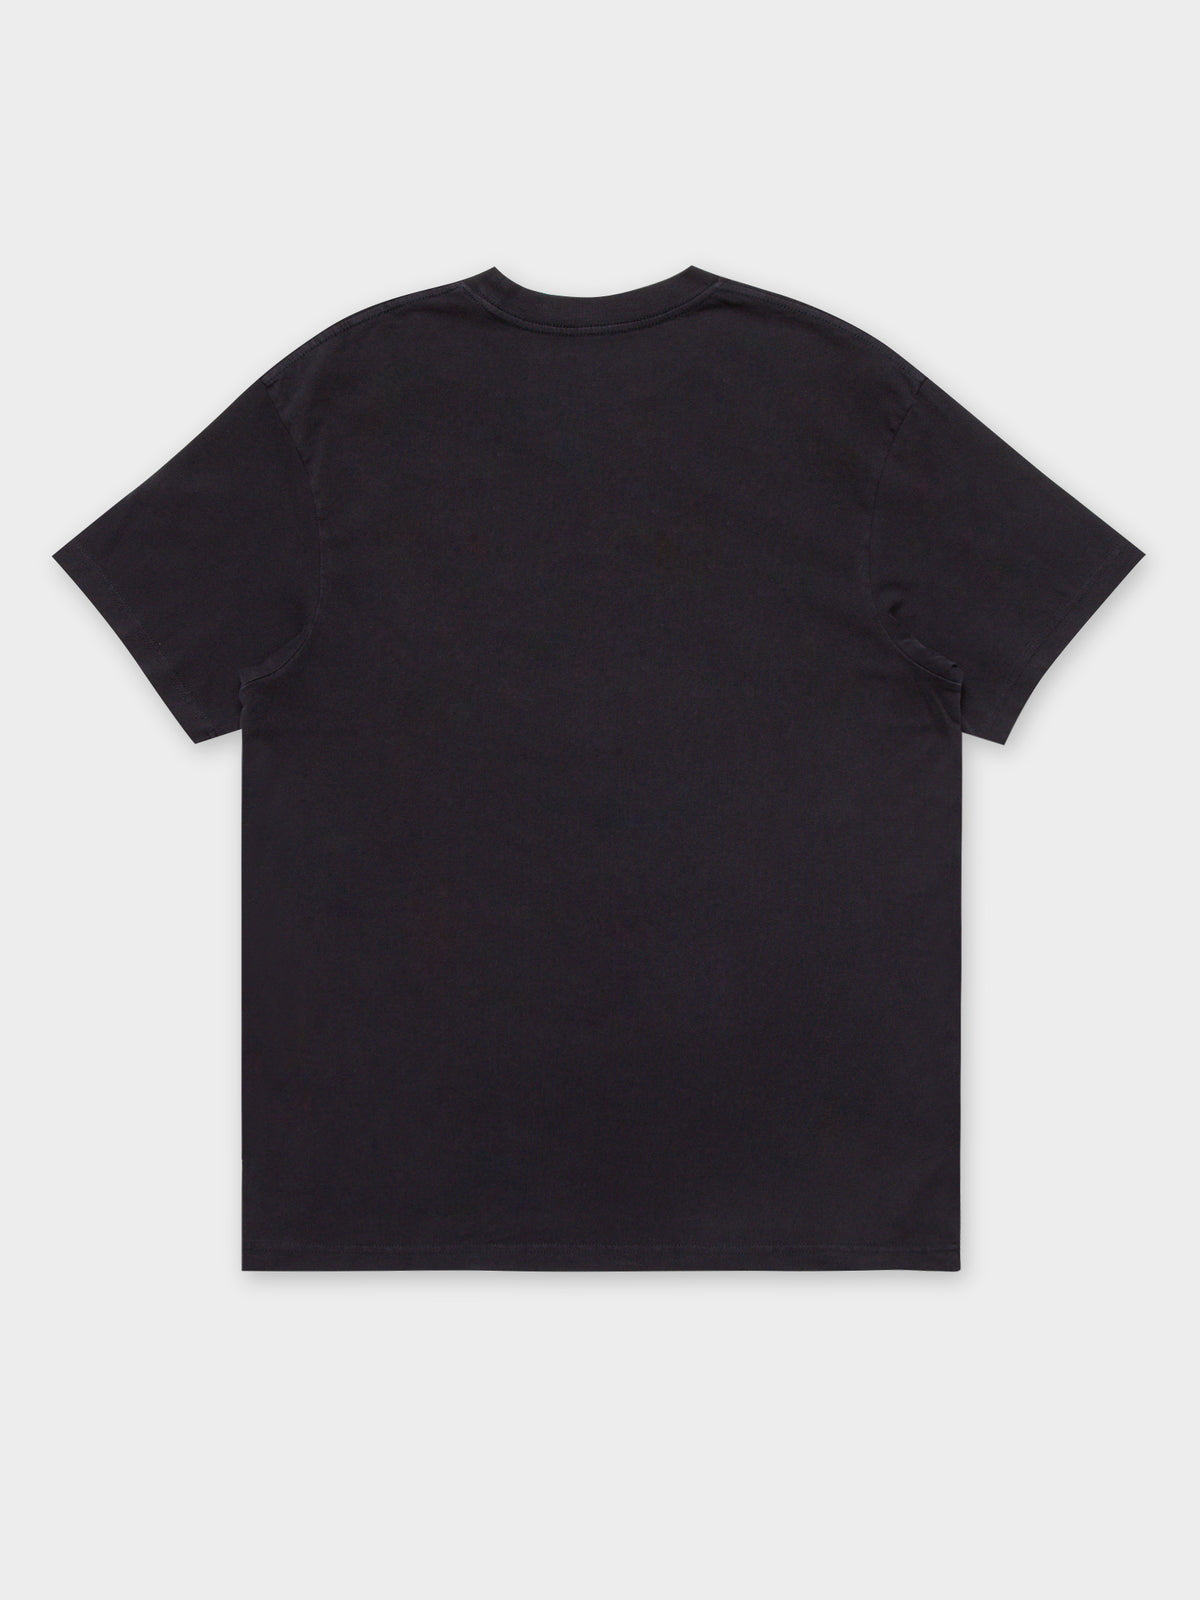 Vintage Scribble Chicago Bulls T-Shirt in Black